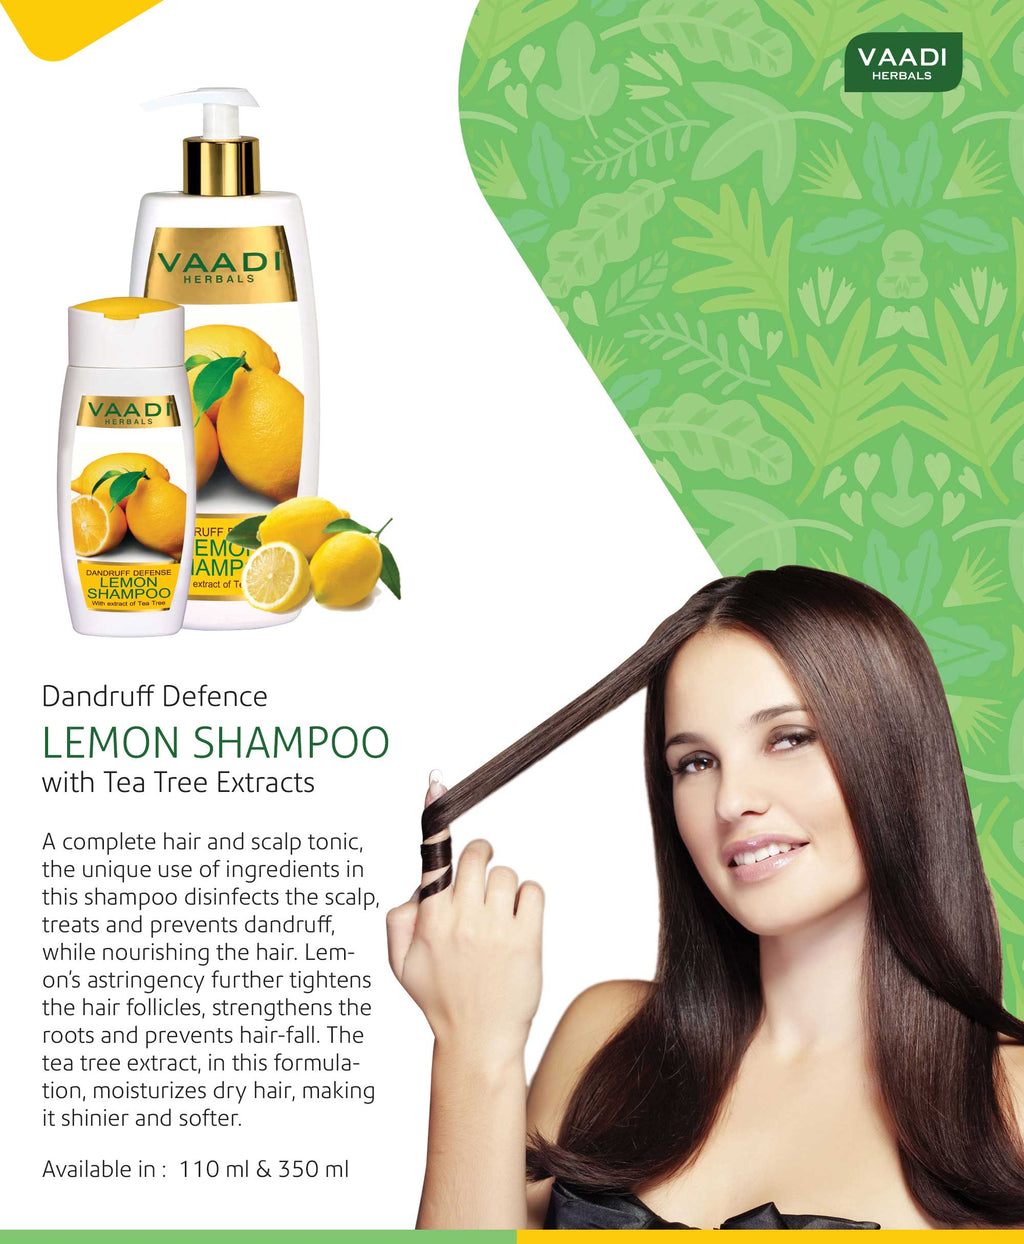 Dandruff Defense Organic Lemon Shampoo with Tea Tree Extract 